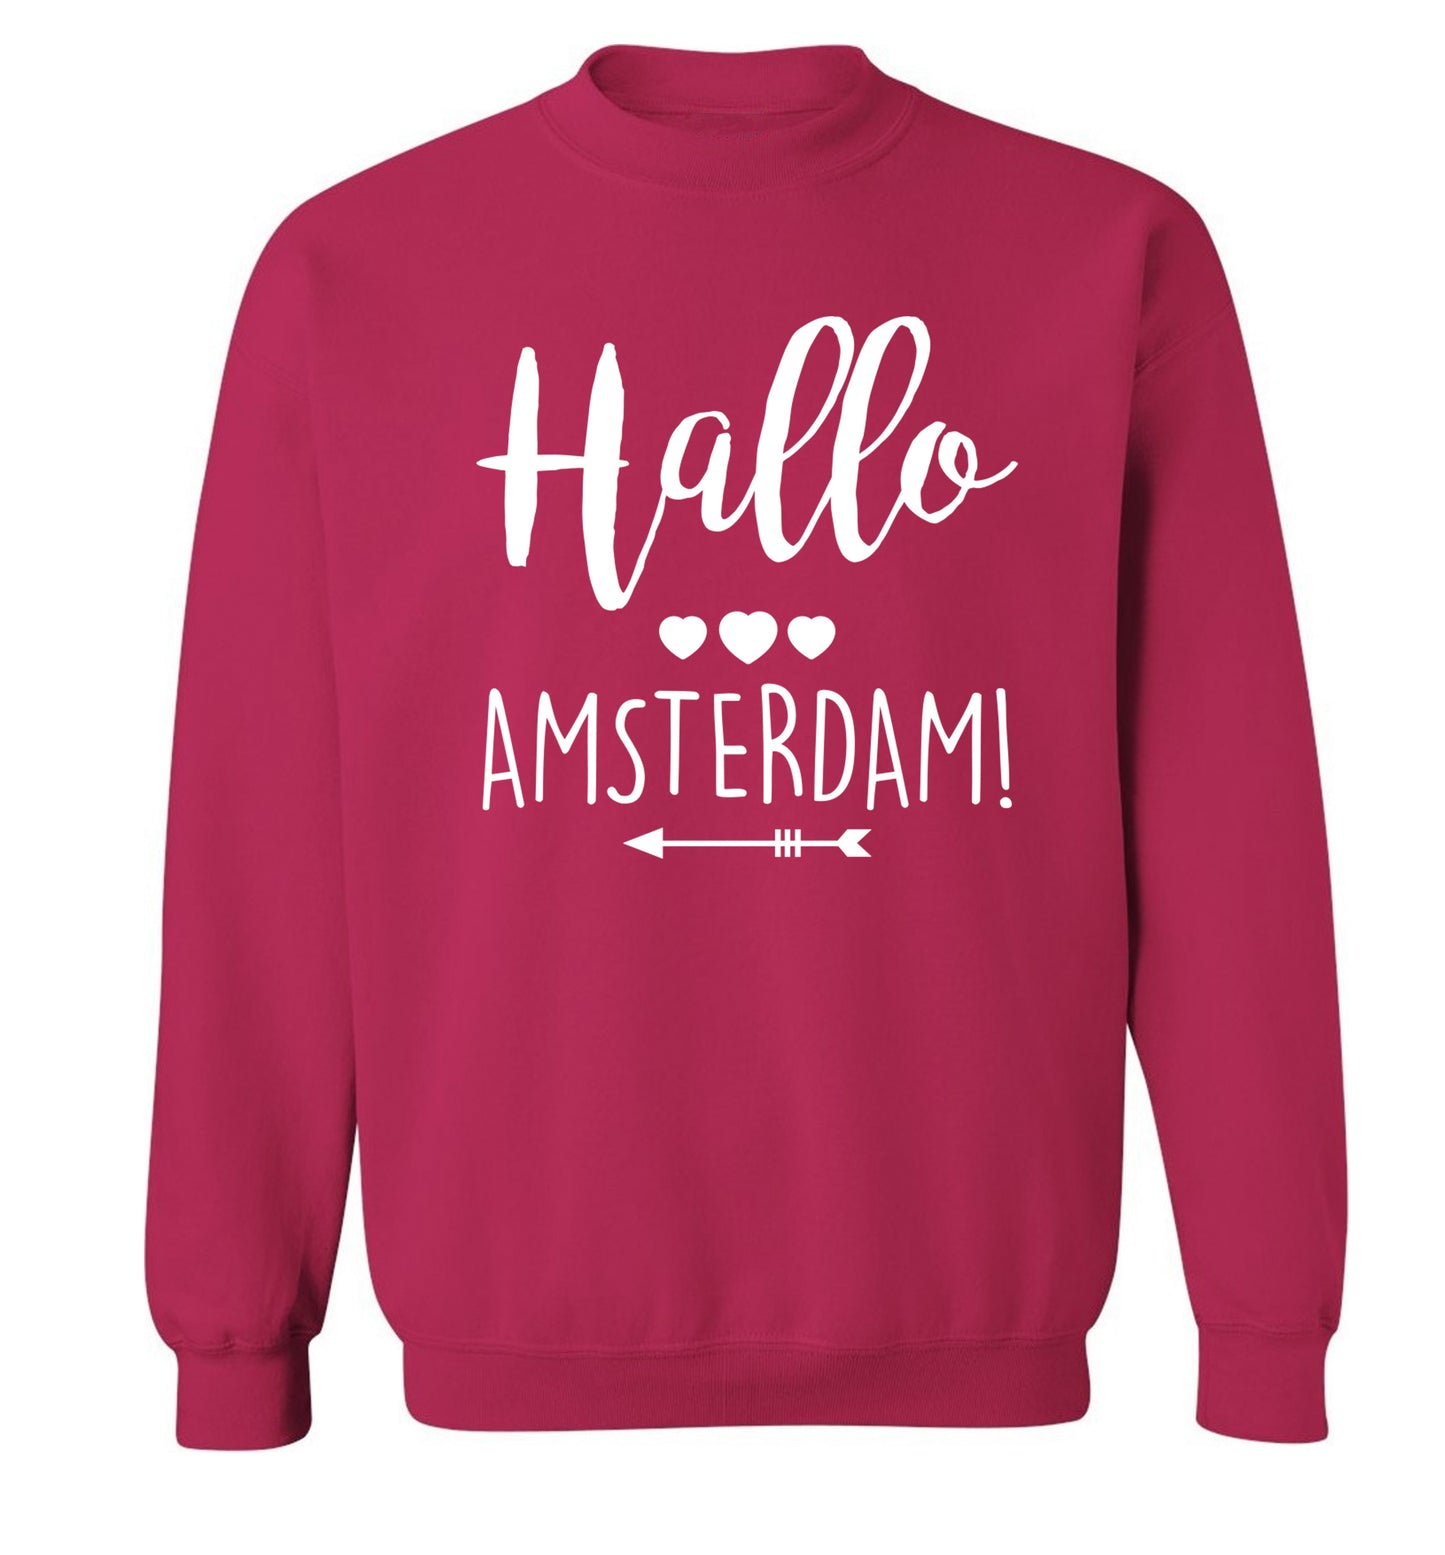 Hallo Amsterdam Adult's unisex pink Sweater 2XL